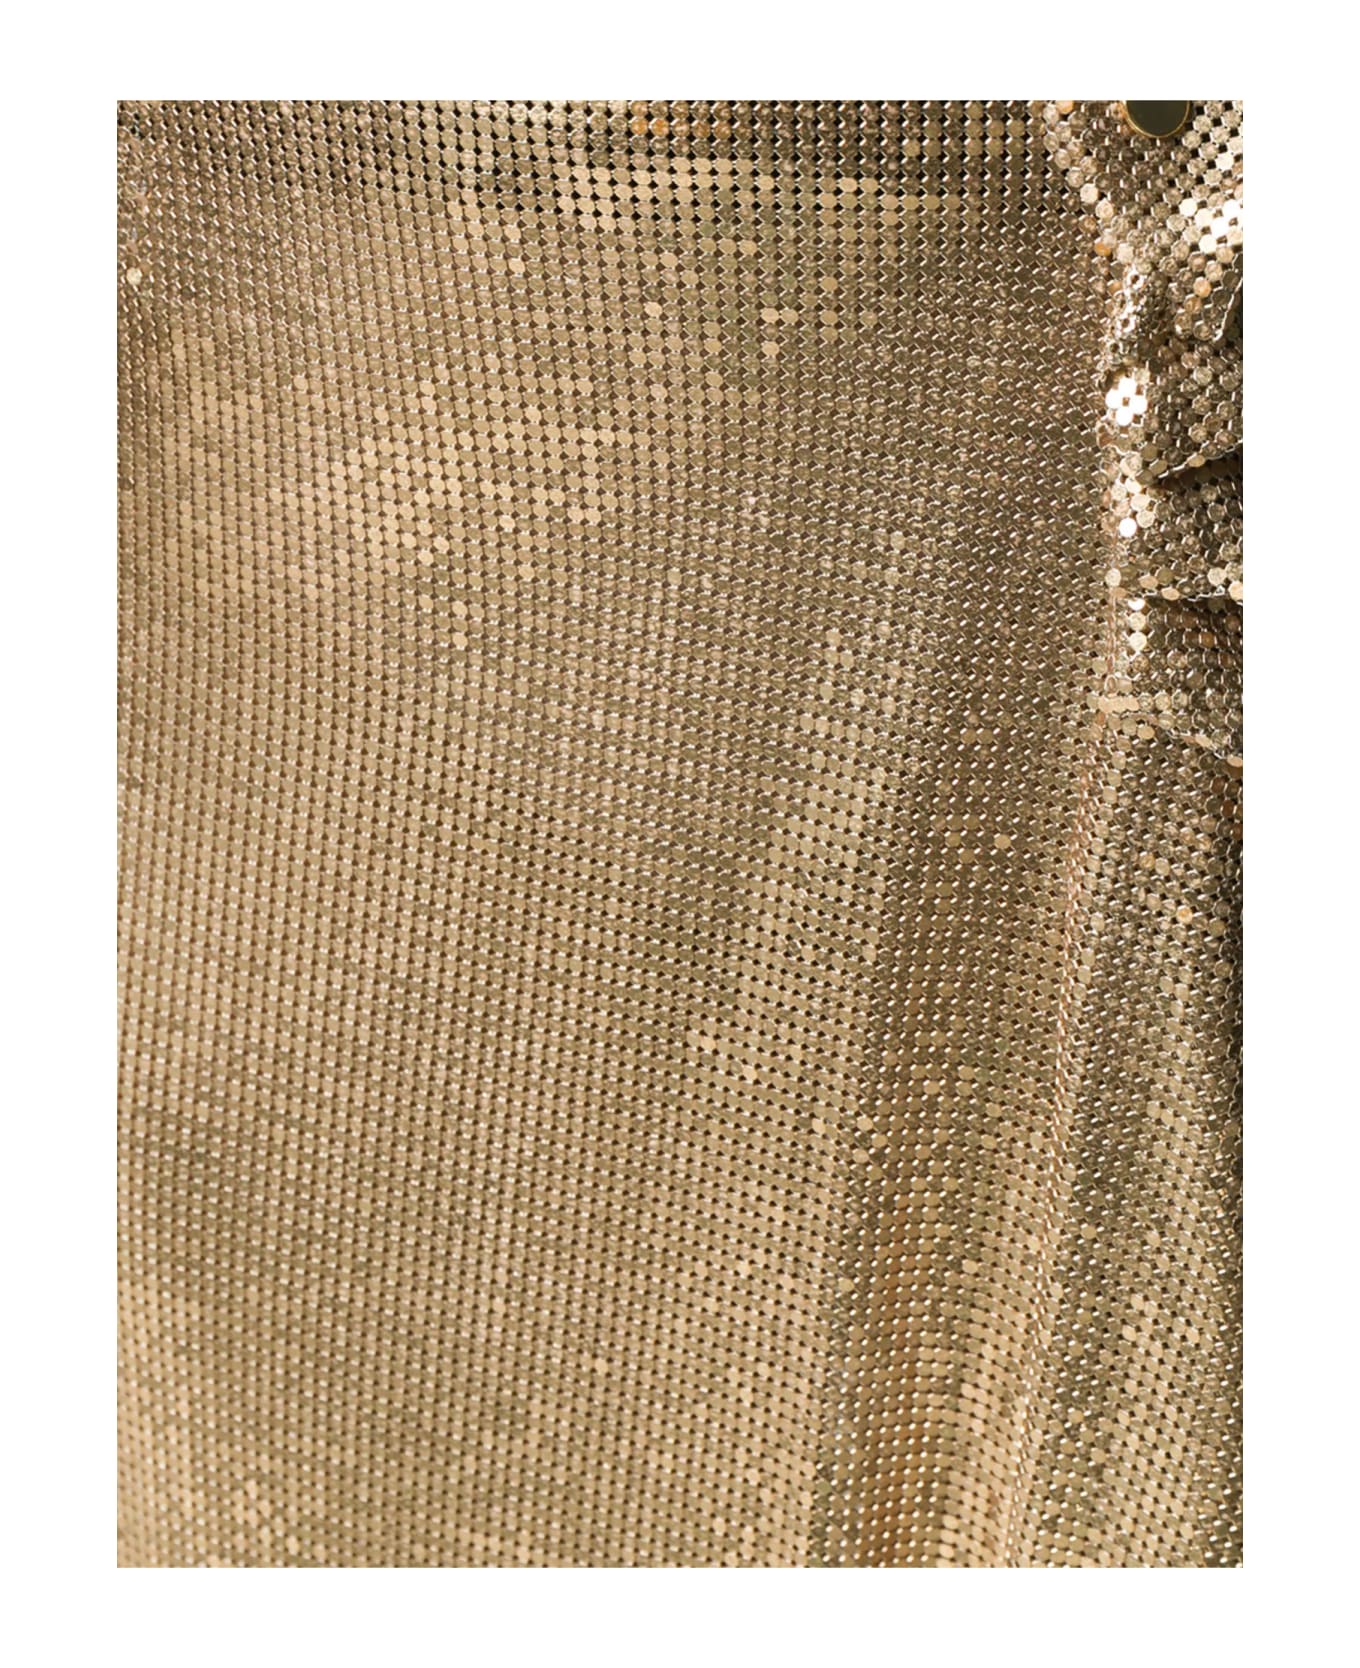 Paco Rabanne Skirt - Golden スカート